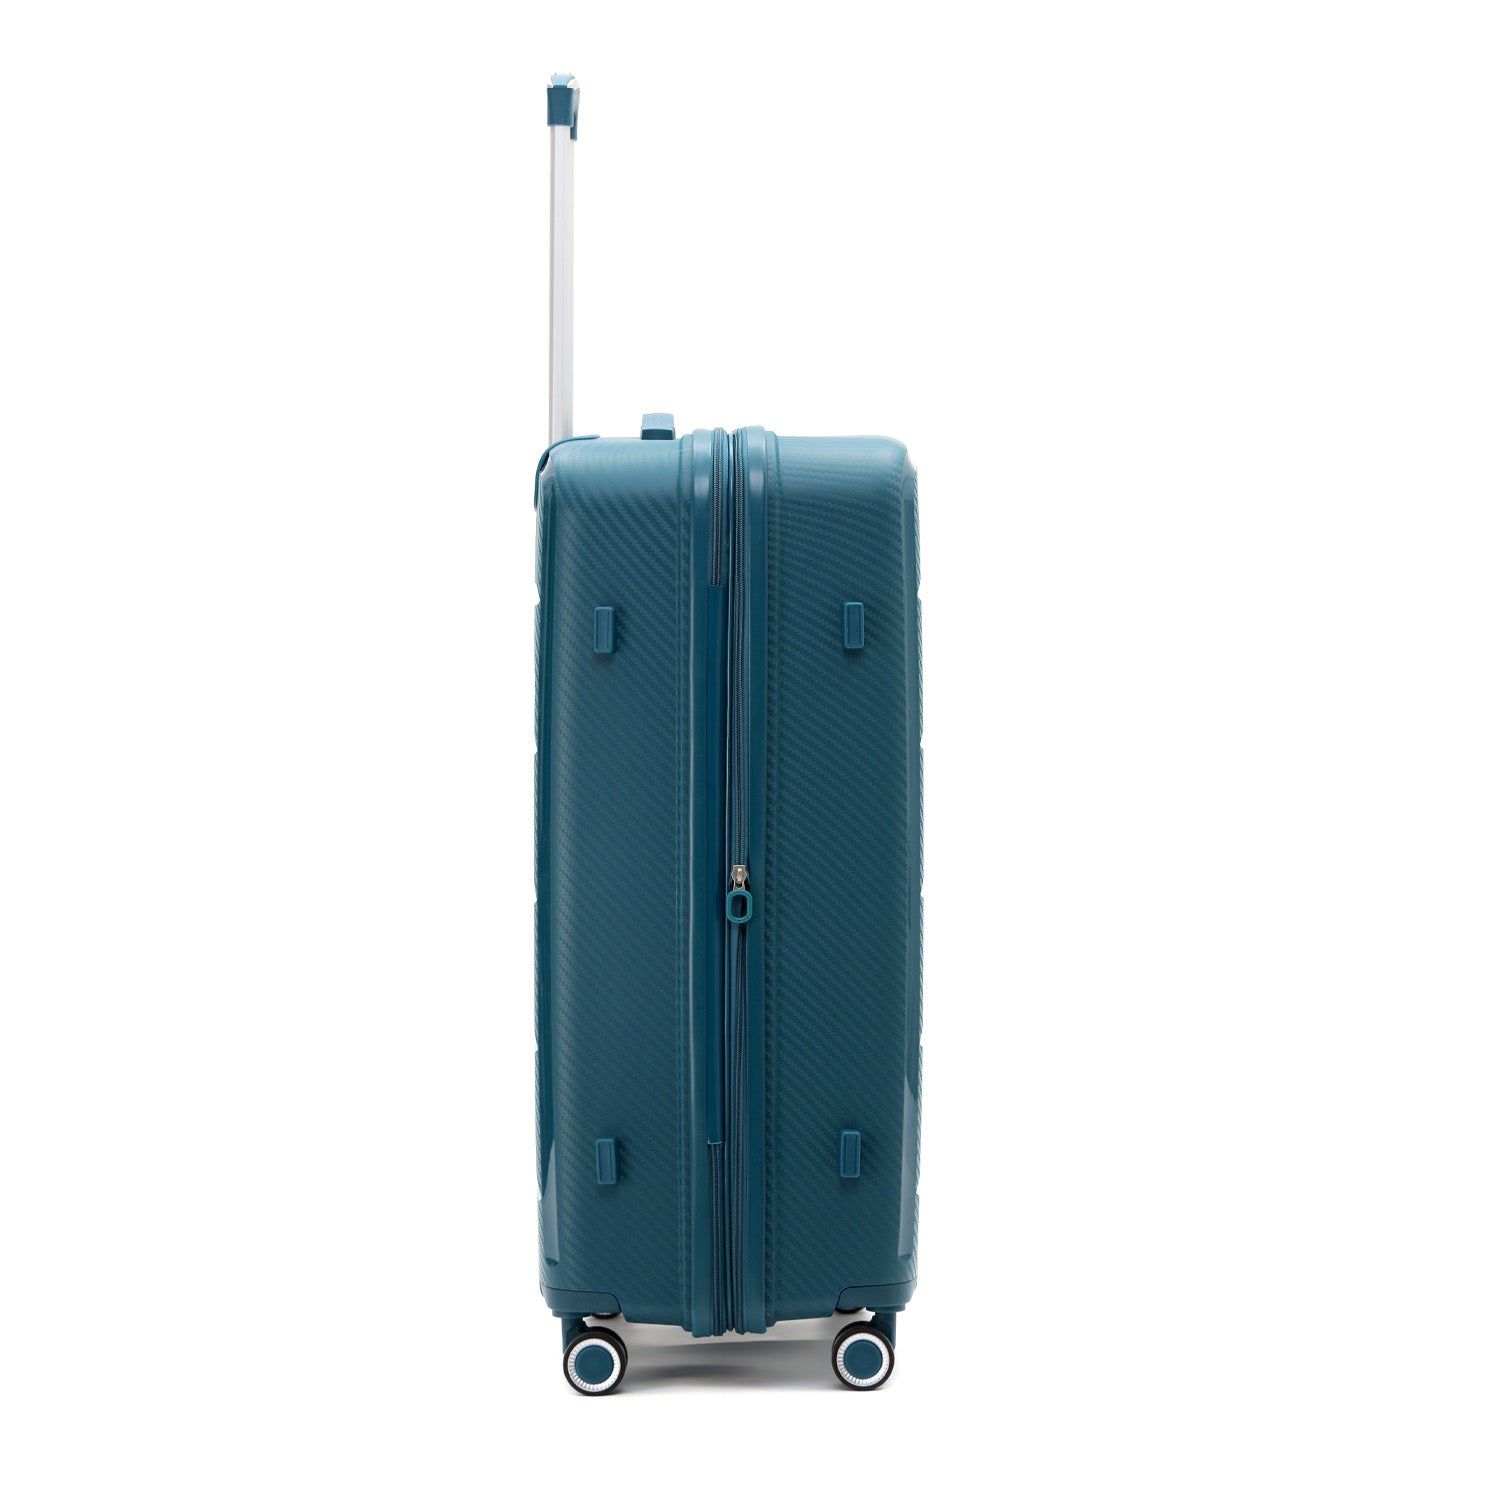 Paklite - PA7350 Set of 3 Suitcases - Blue-7